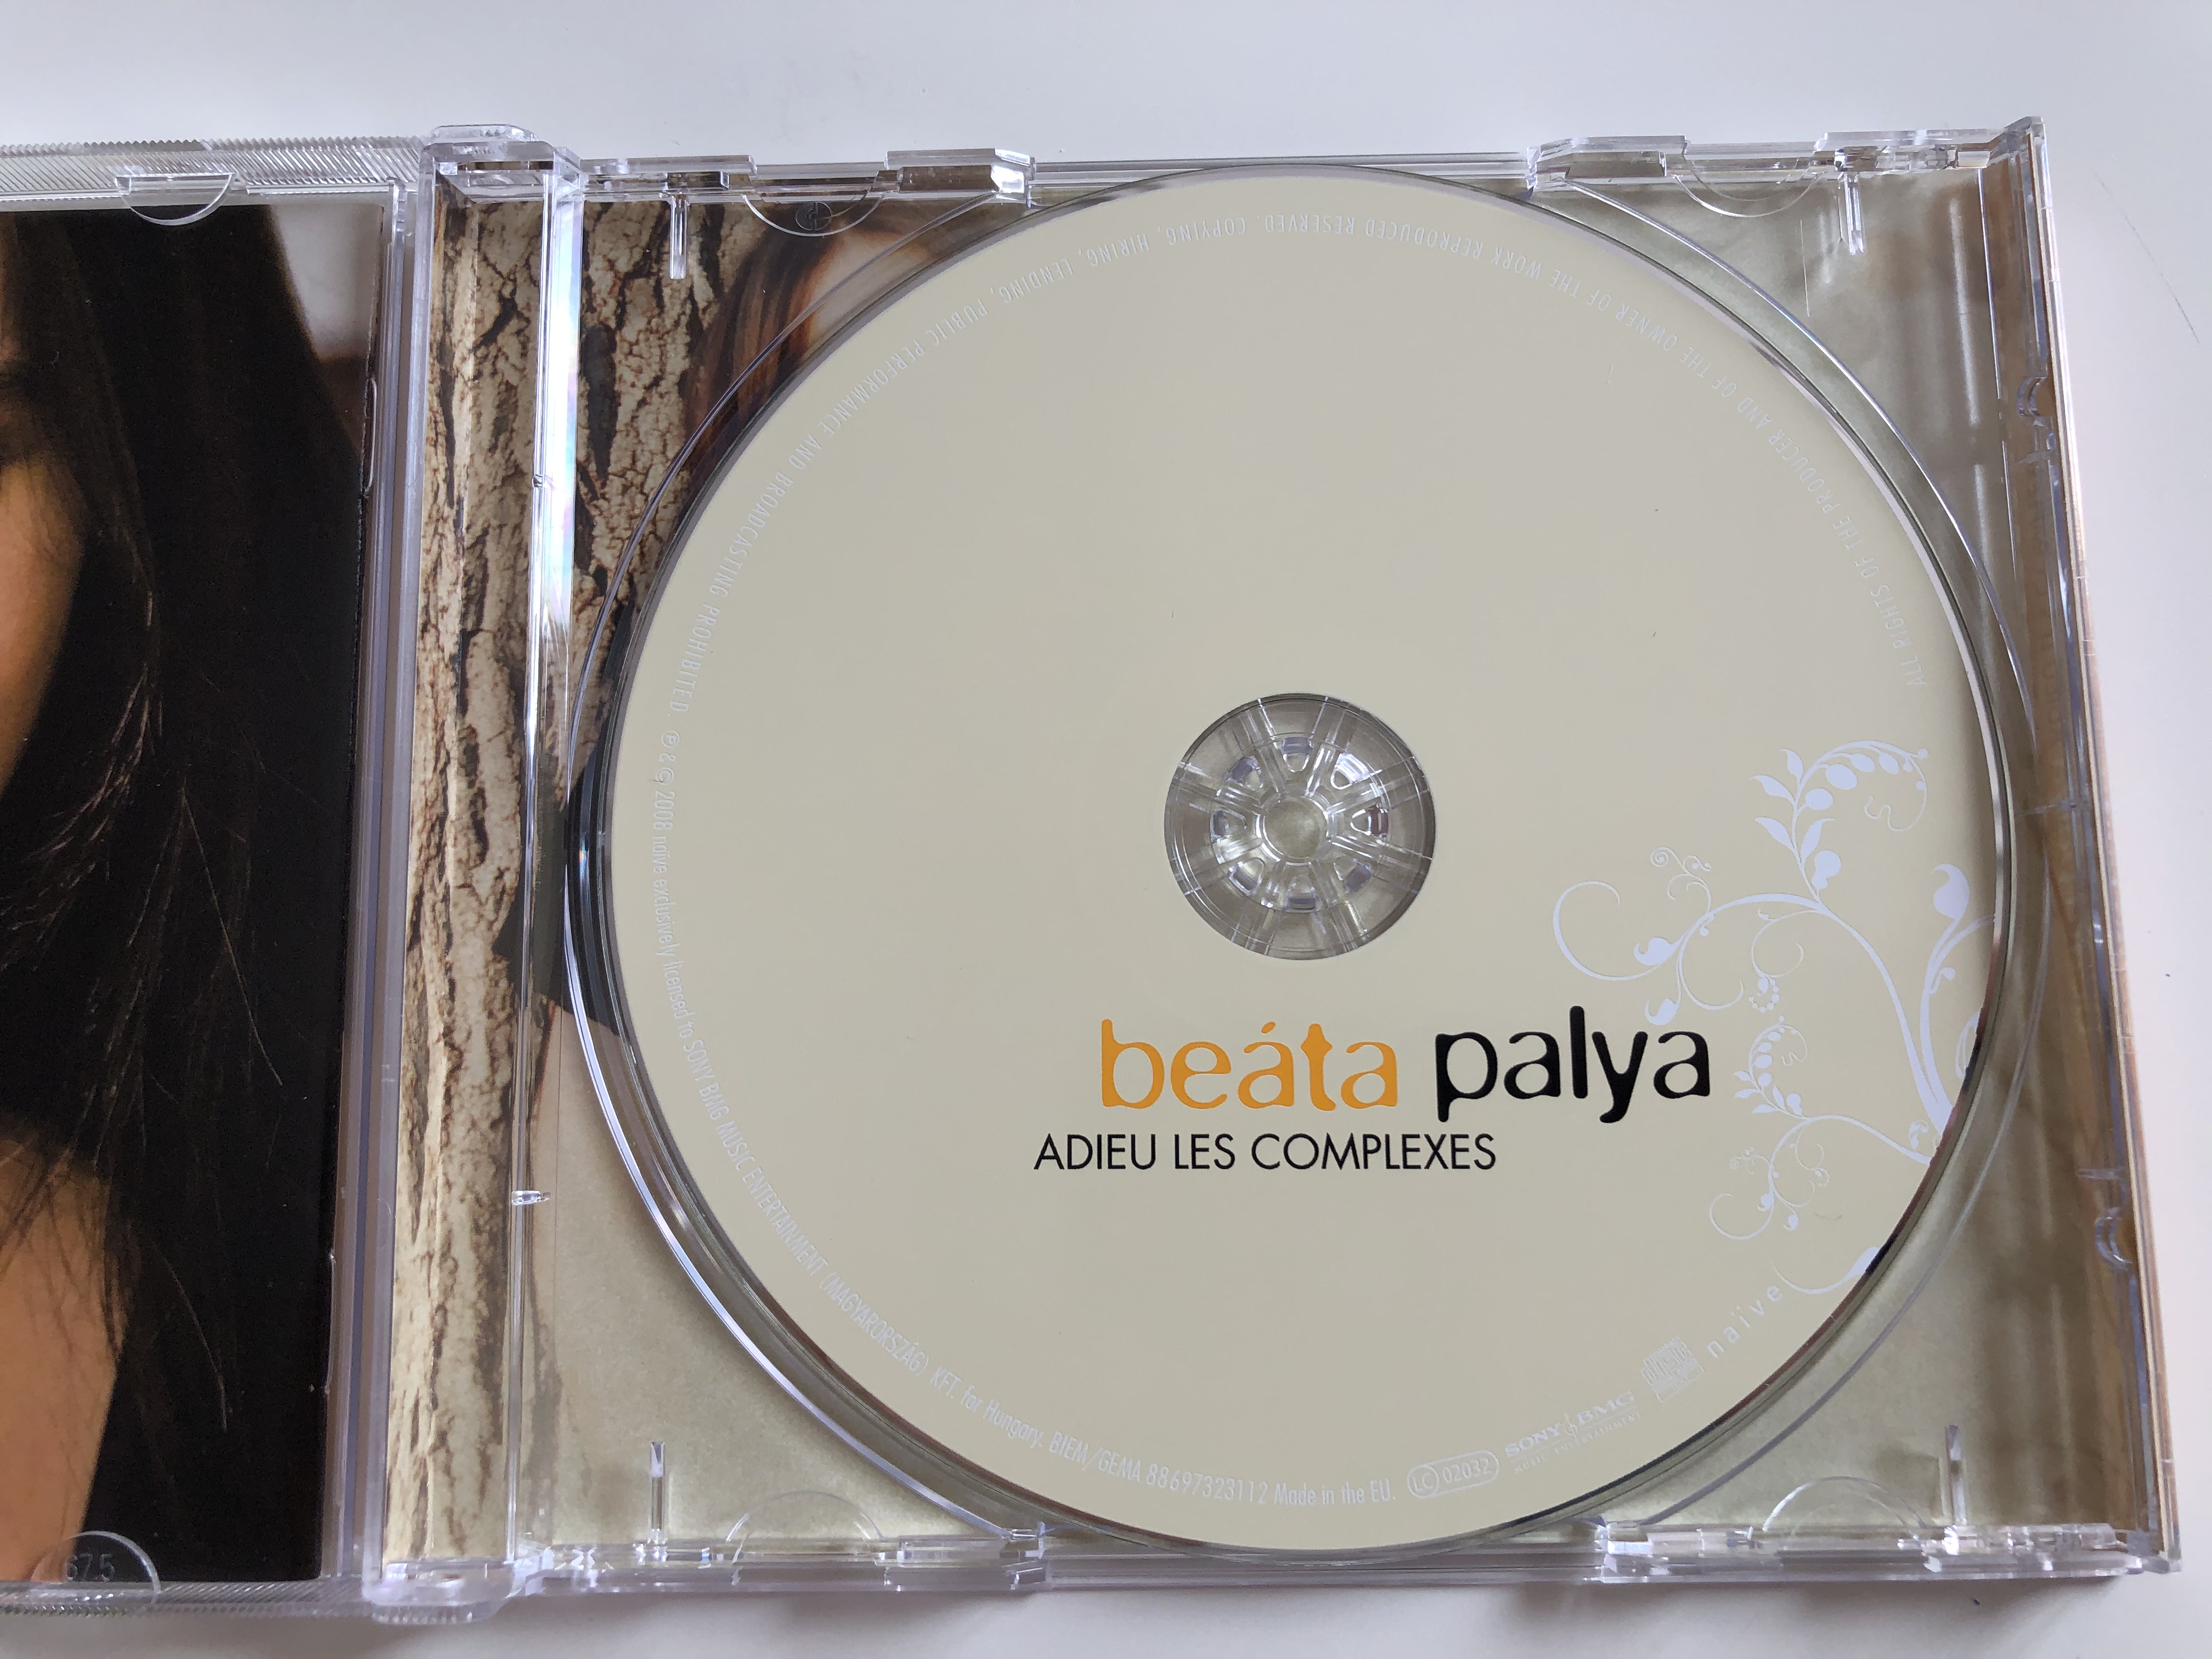 be-ta-palya-adieu-les-complexes-sony-bmg-music-entertainment-audio-cd-2008-88697323112-10-.jpg